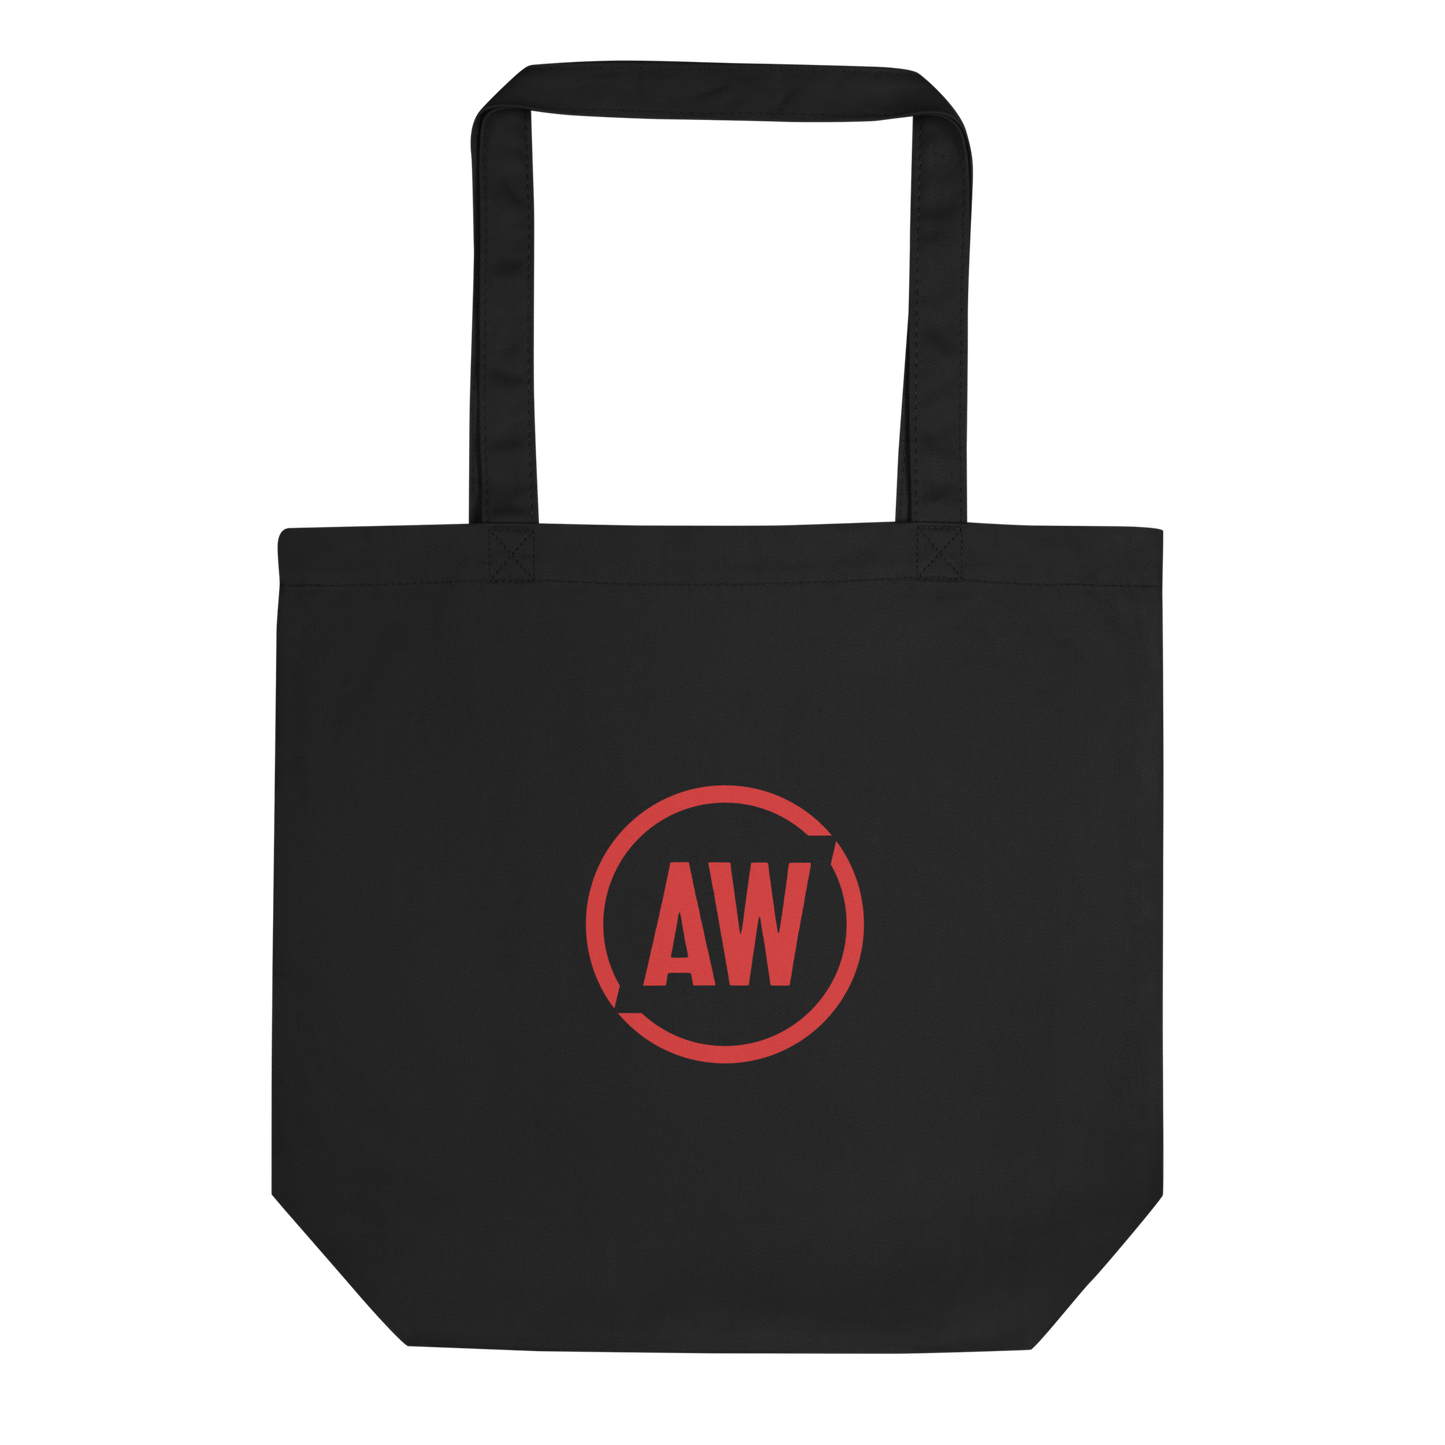 Arkansas Worker 'AW' Logo Tote